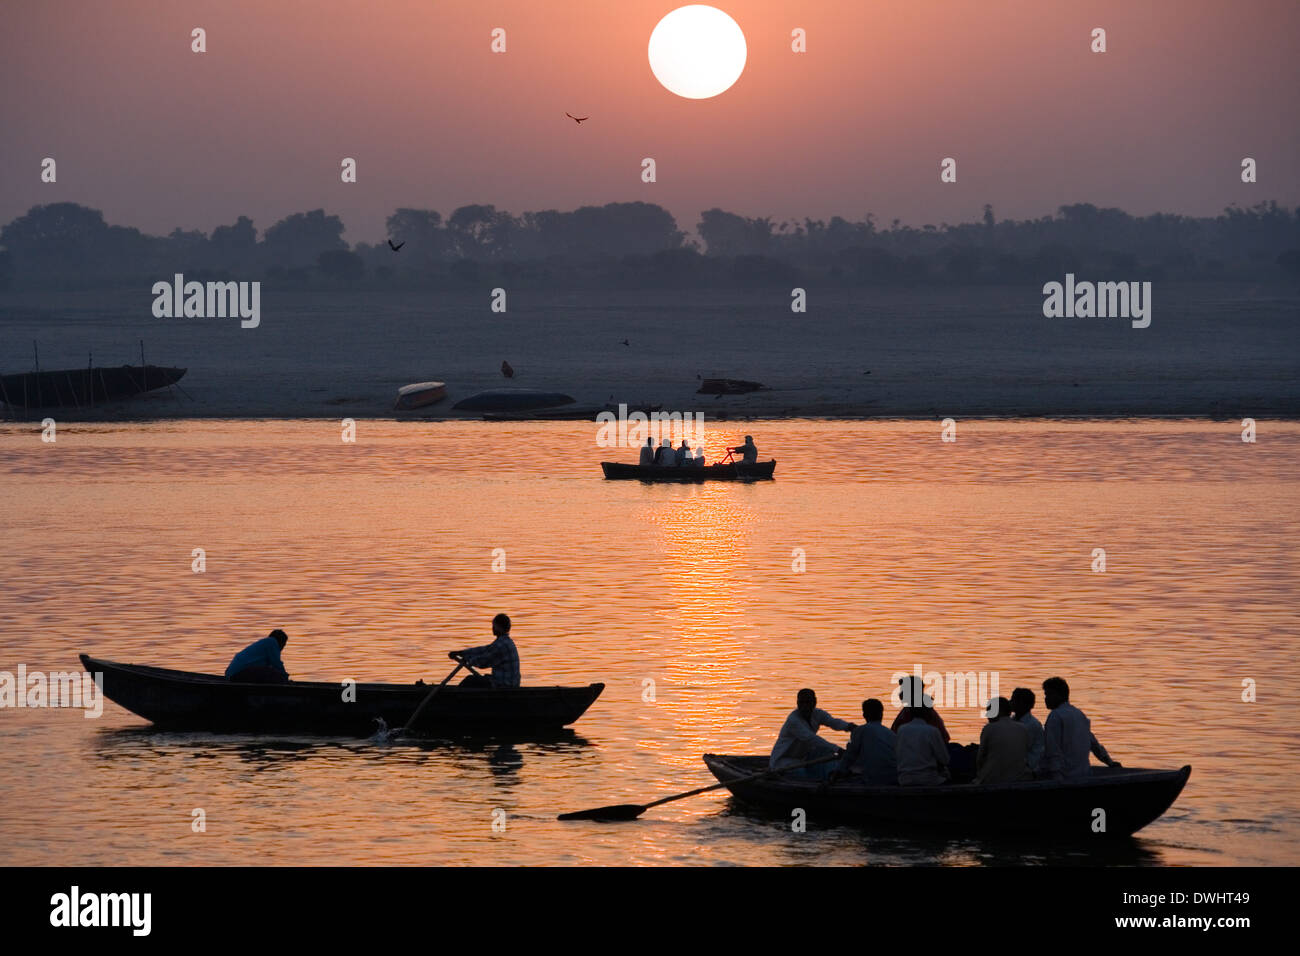 Dawn al ghats indù sulle rive del fiume sacro Gange - Varanasi - India Foto Stock